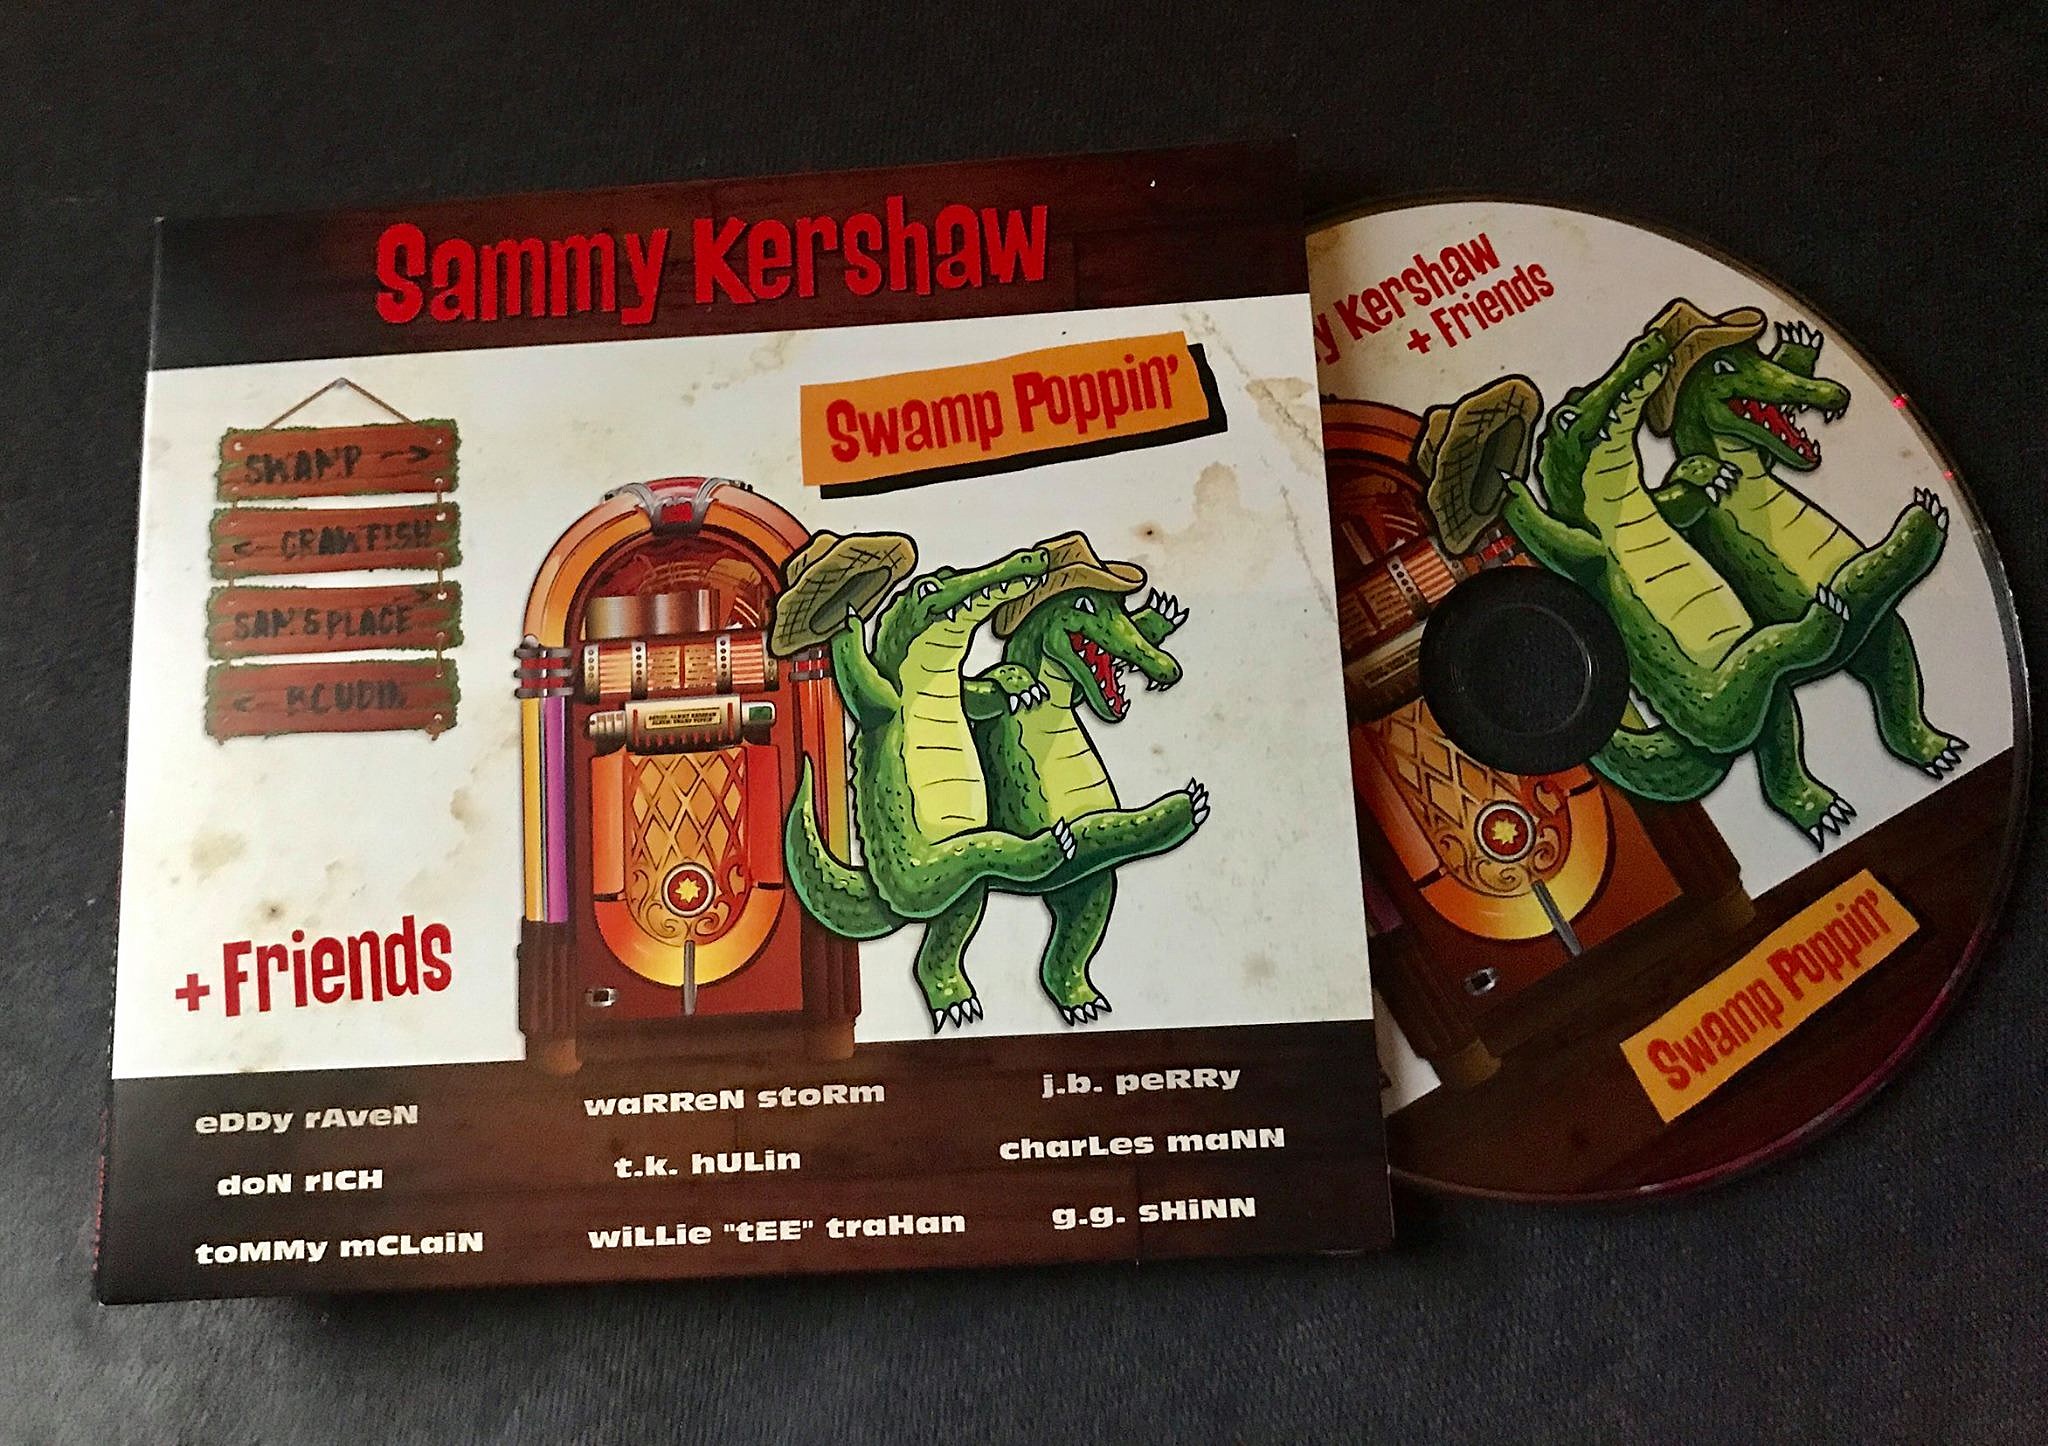 Sammy Kershaw Releases New Album With Swamp Pop Legends [VIDEO]